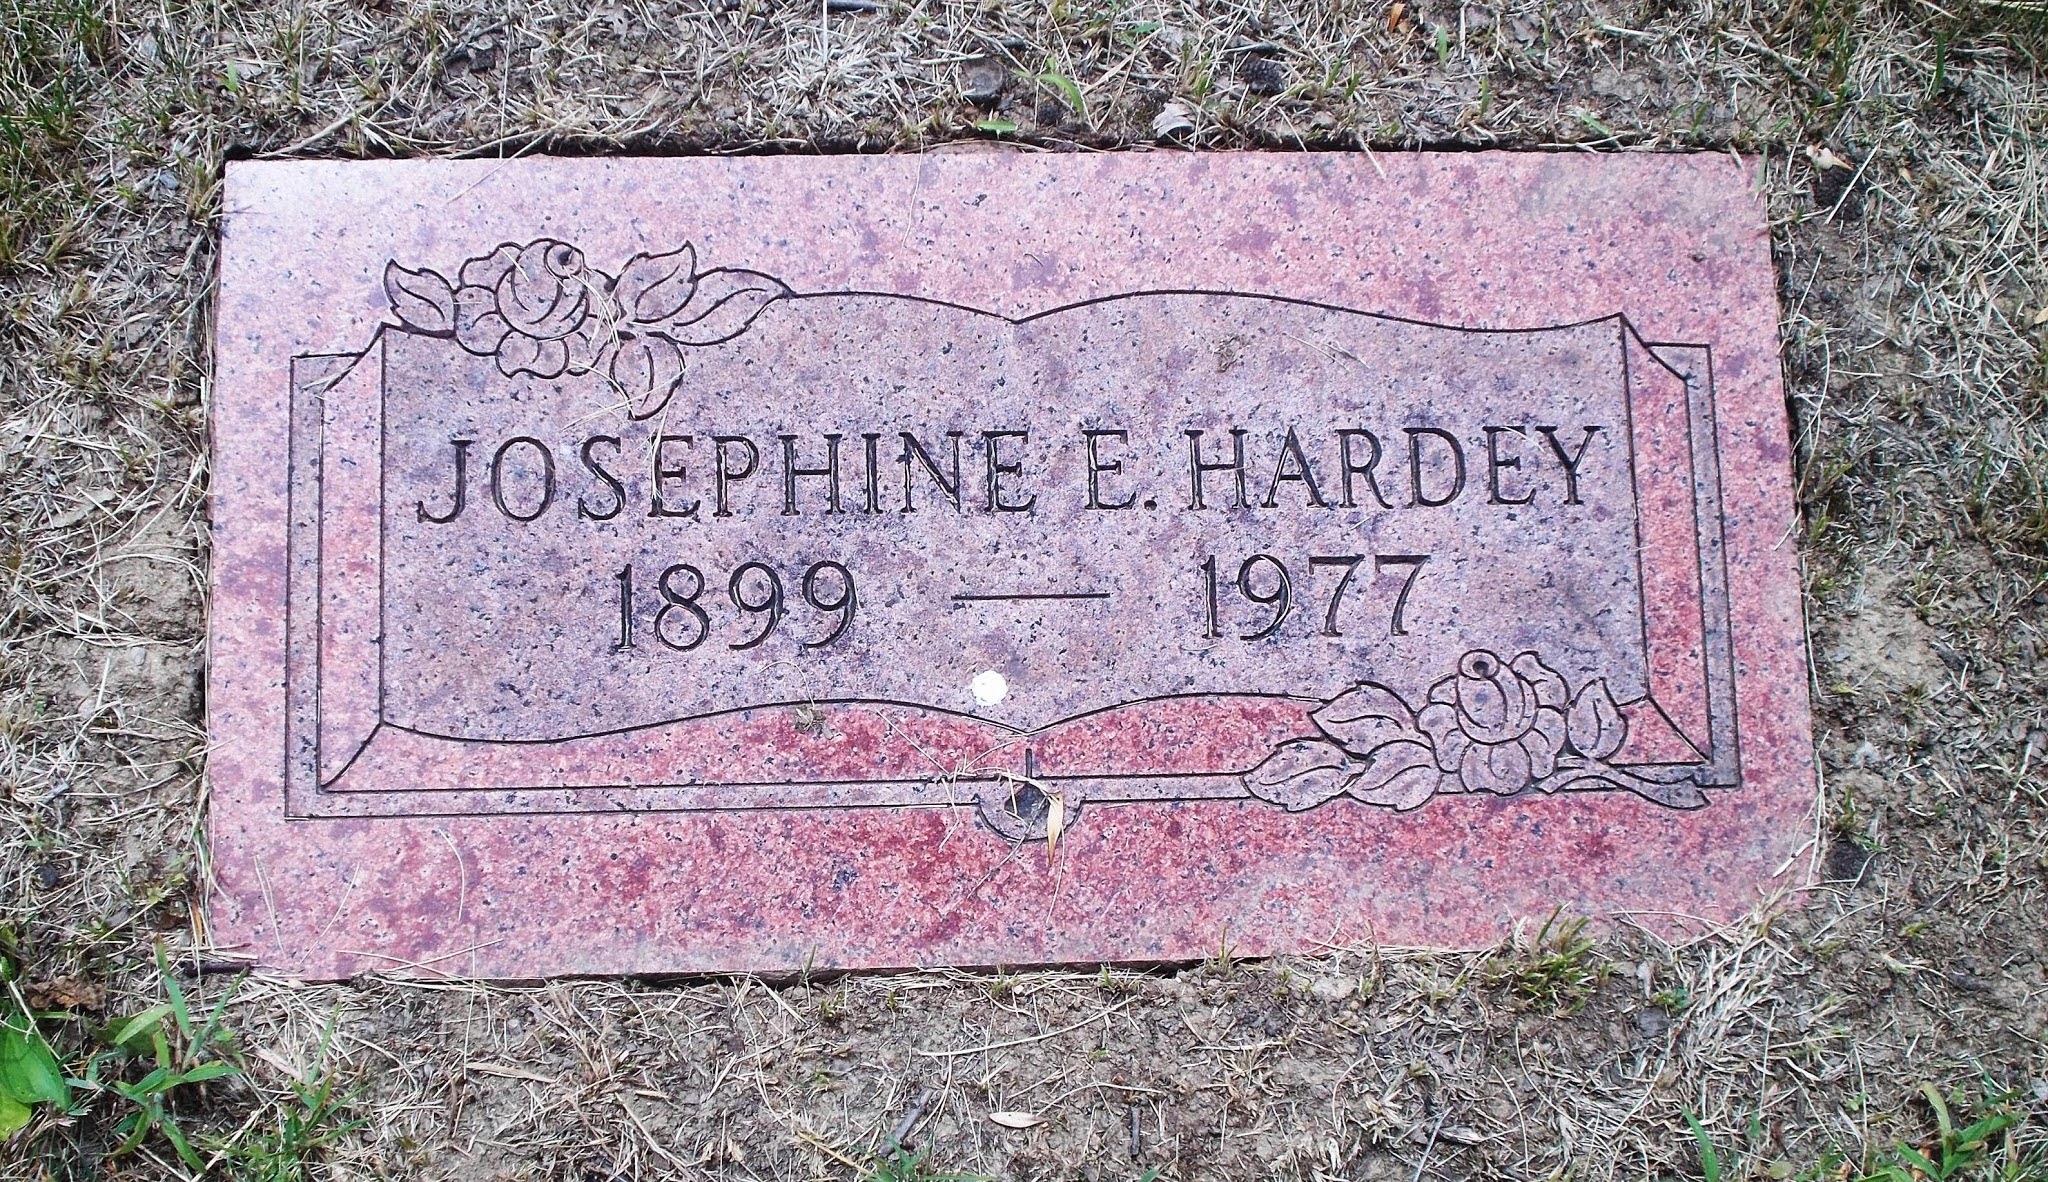 Josephine E Hardey